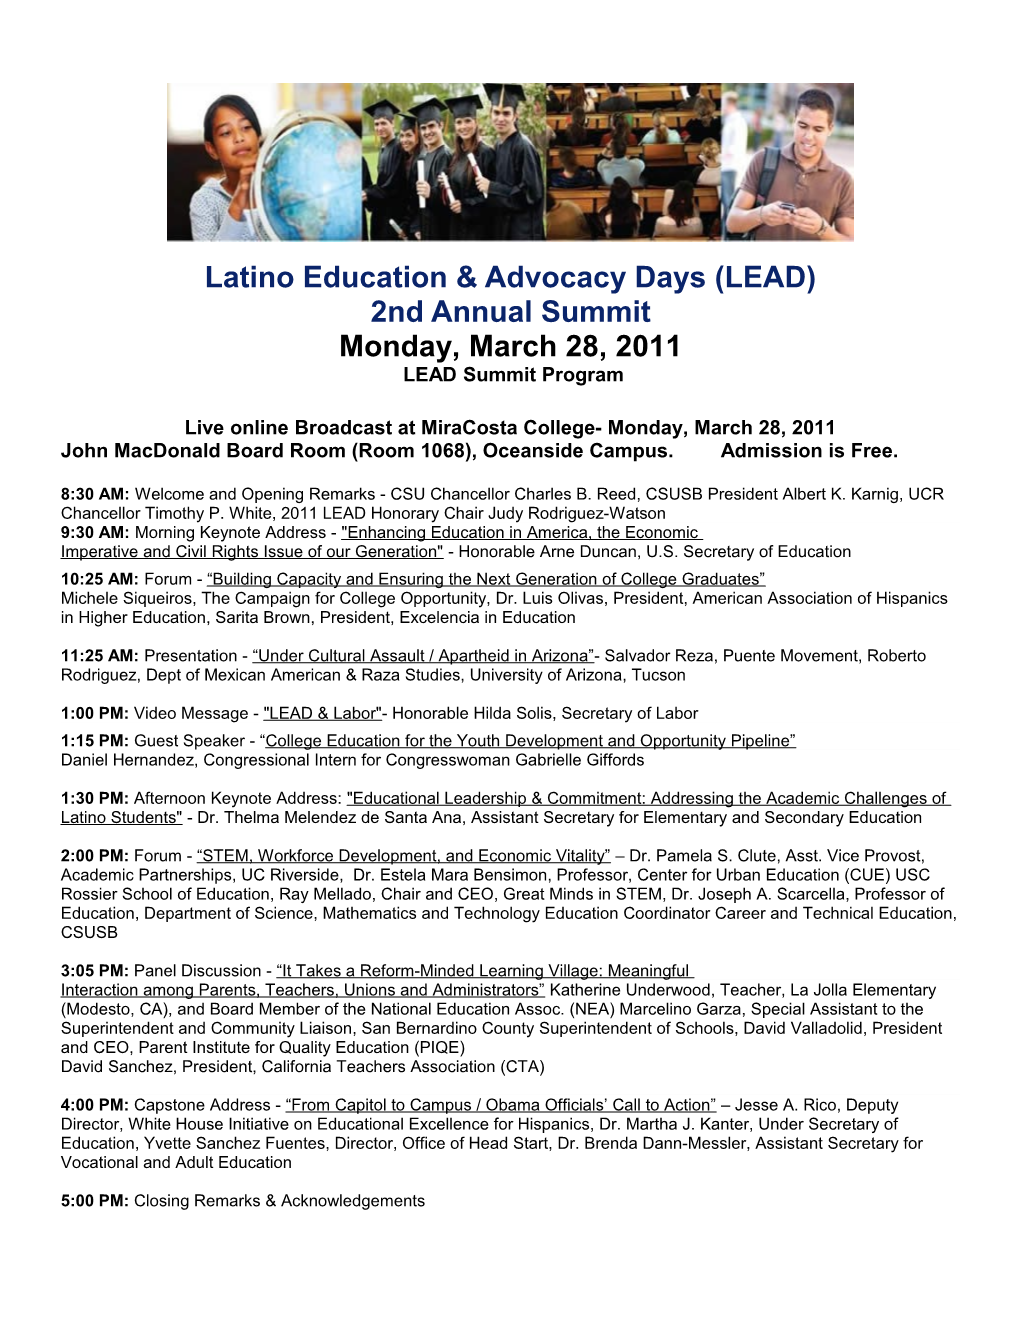 Latino Education & Advocacy Days (LEAD) 2Nd Annual Summit